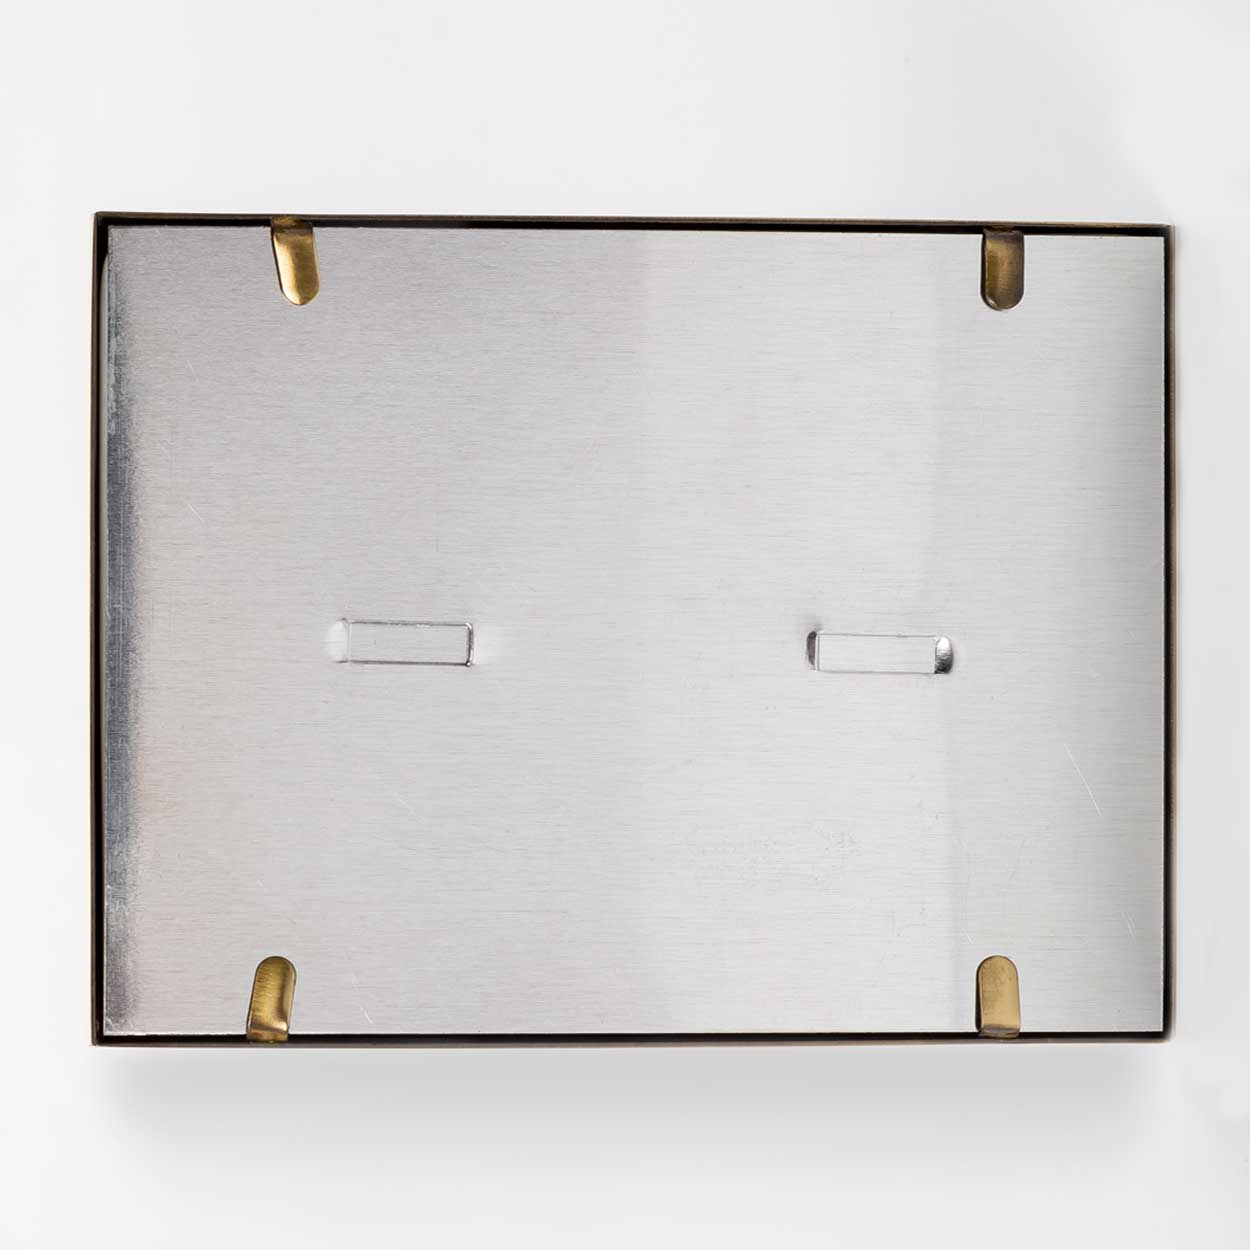 Fotocerámica rectangular con marco de bronce - Horitzontal